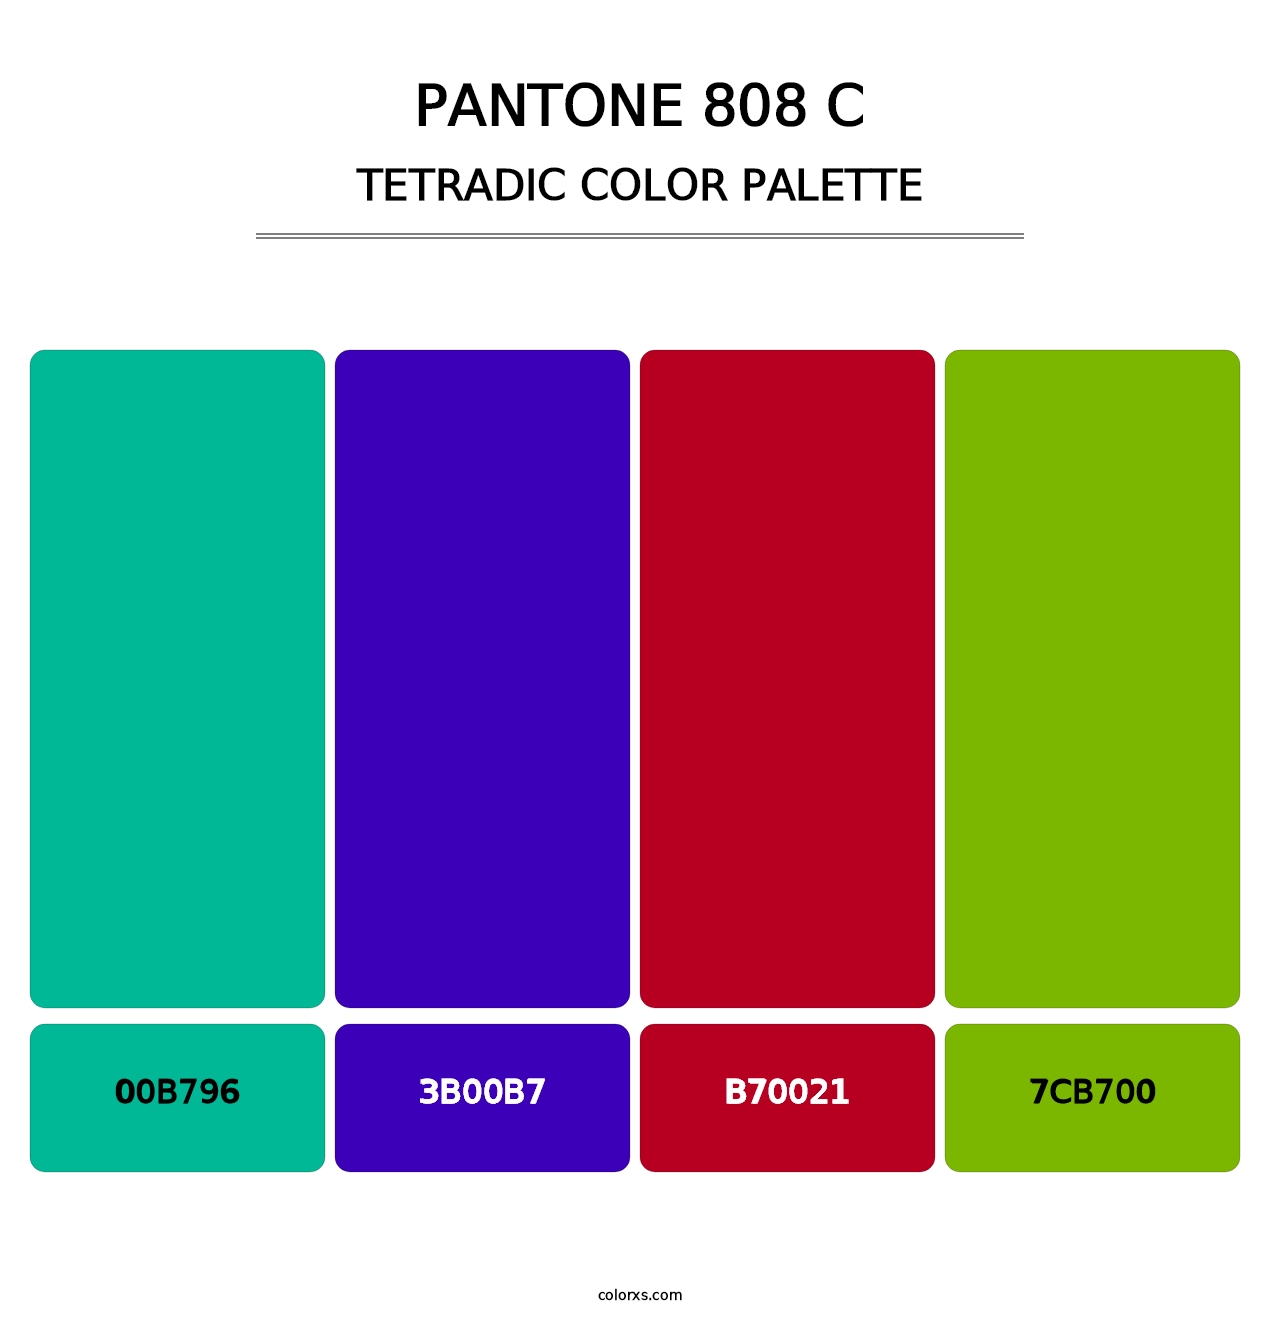 PANTONE 808 C - Tetradic Color Palette